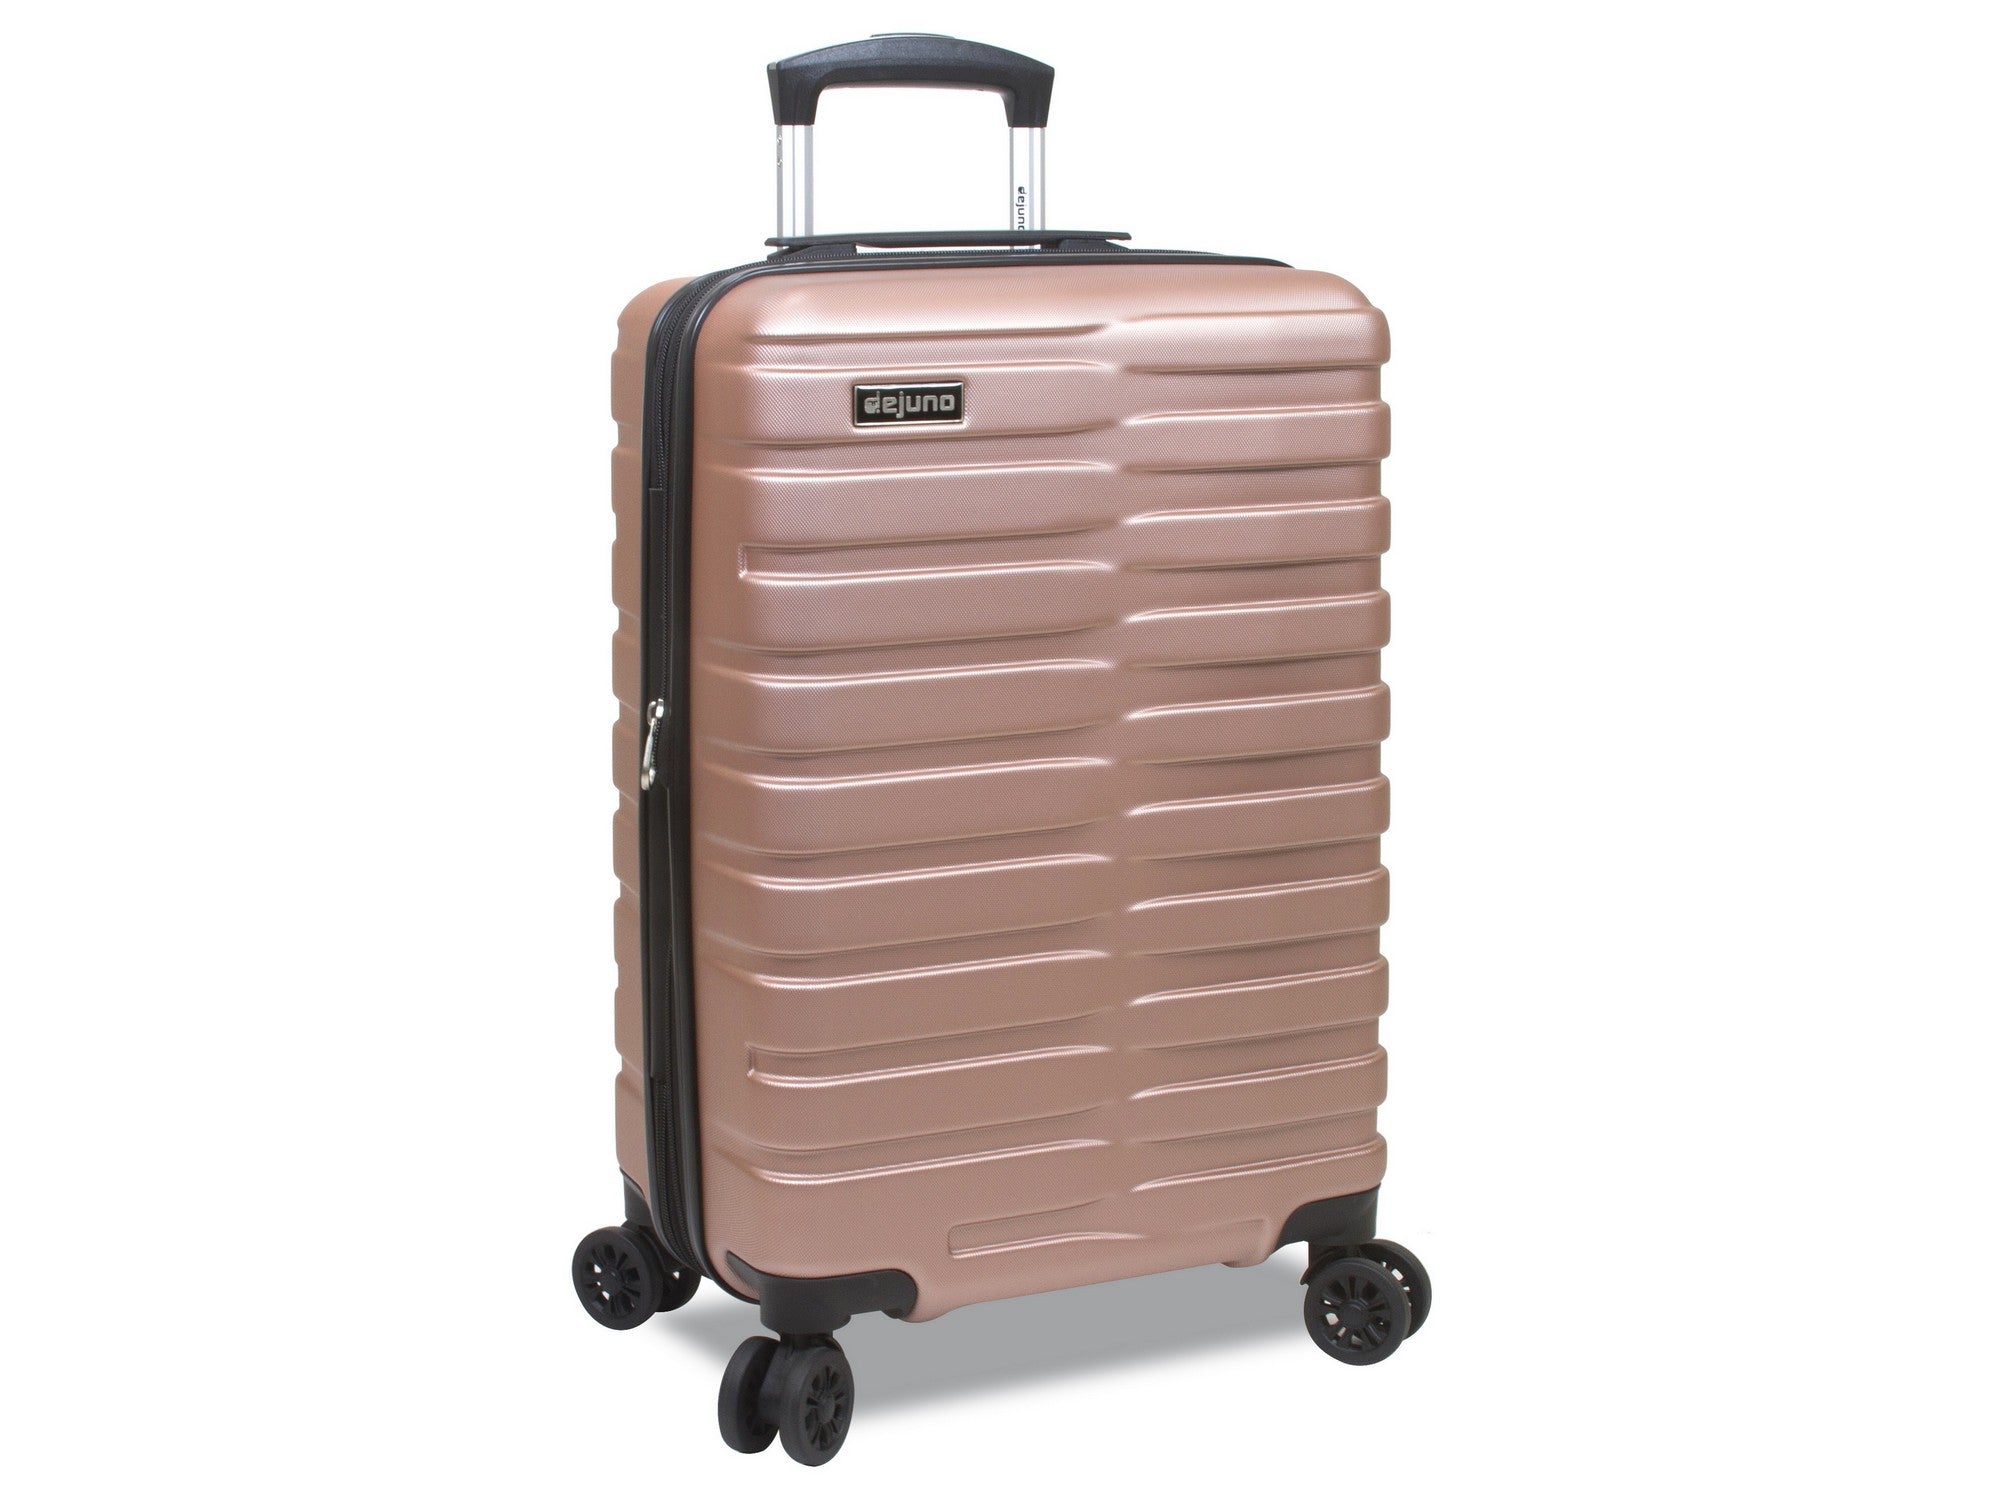 Dejuno Cortex Lightweight 3-Piece Hardside Spinner Luggage Set